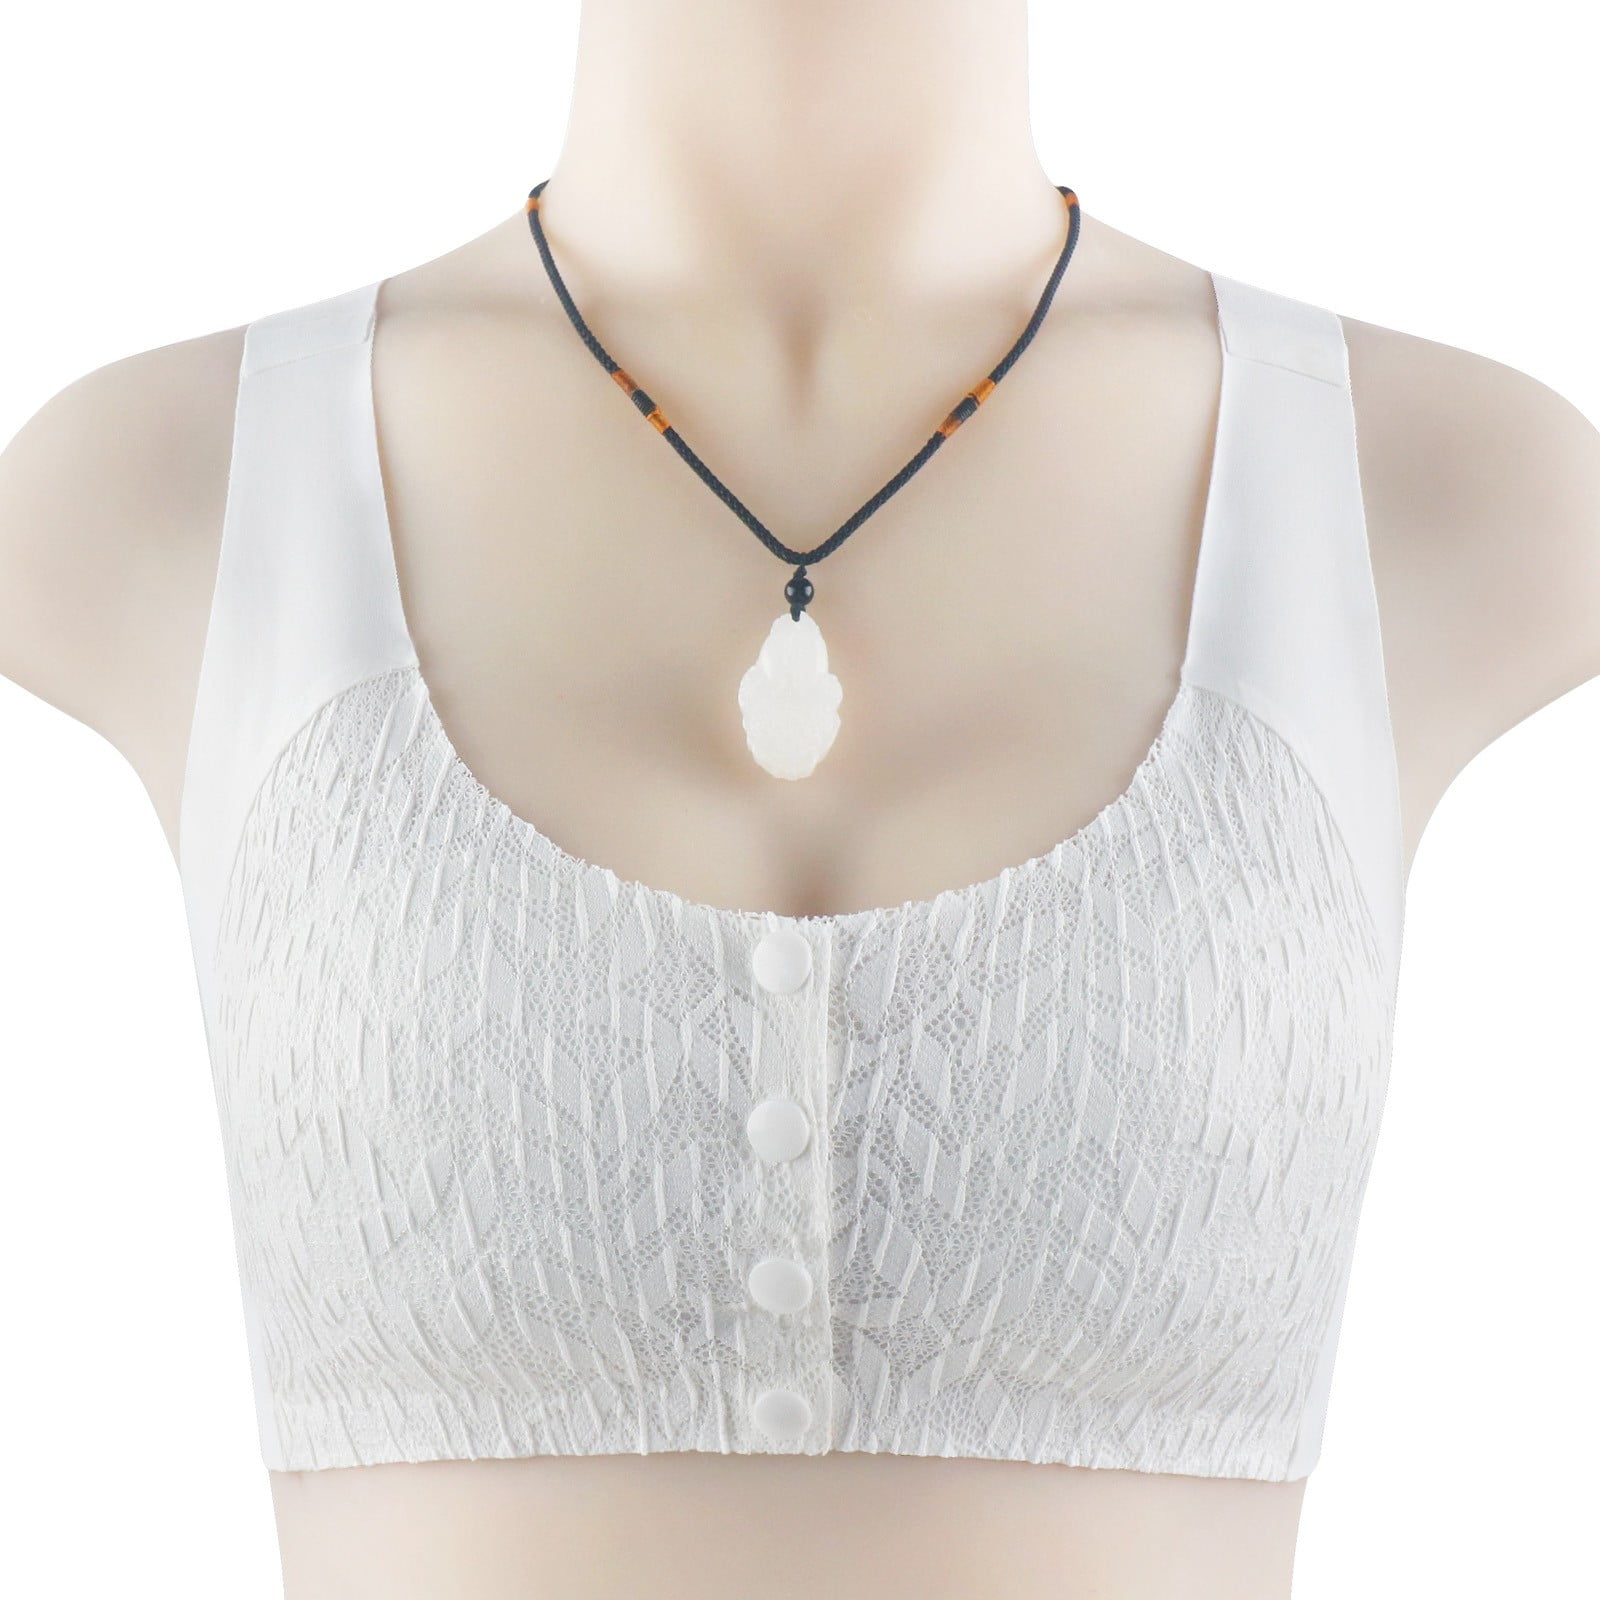 Entyinea Minimizer Bras for Women Cotton Stretch Extreme Comfort Bra Black  3XL 